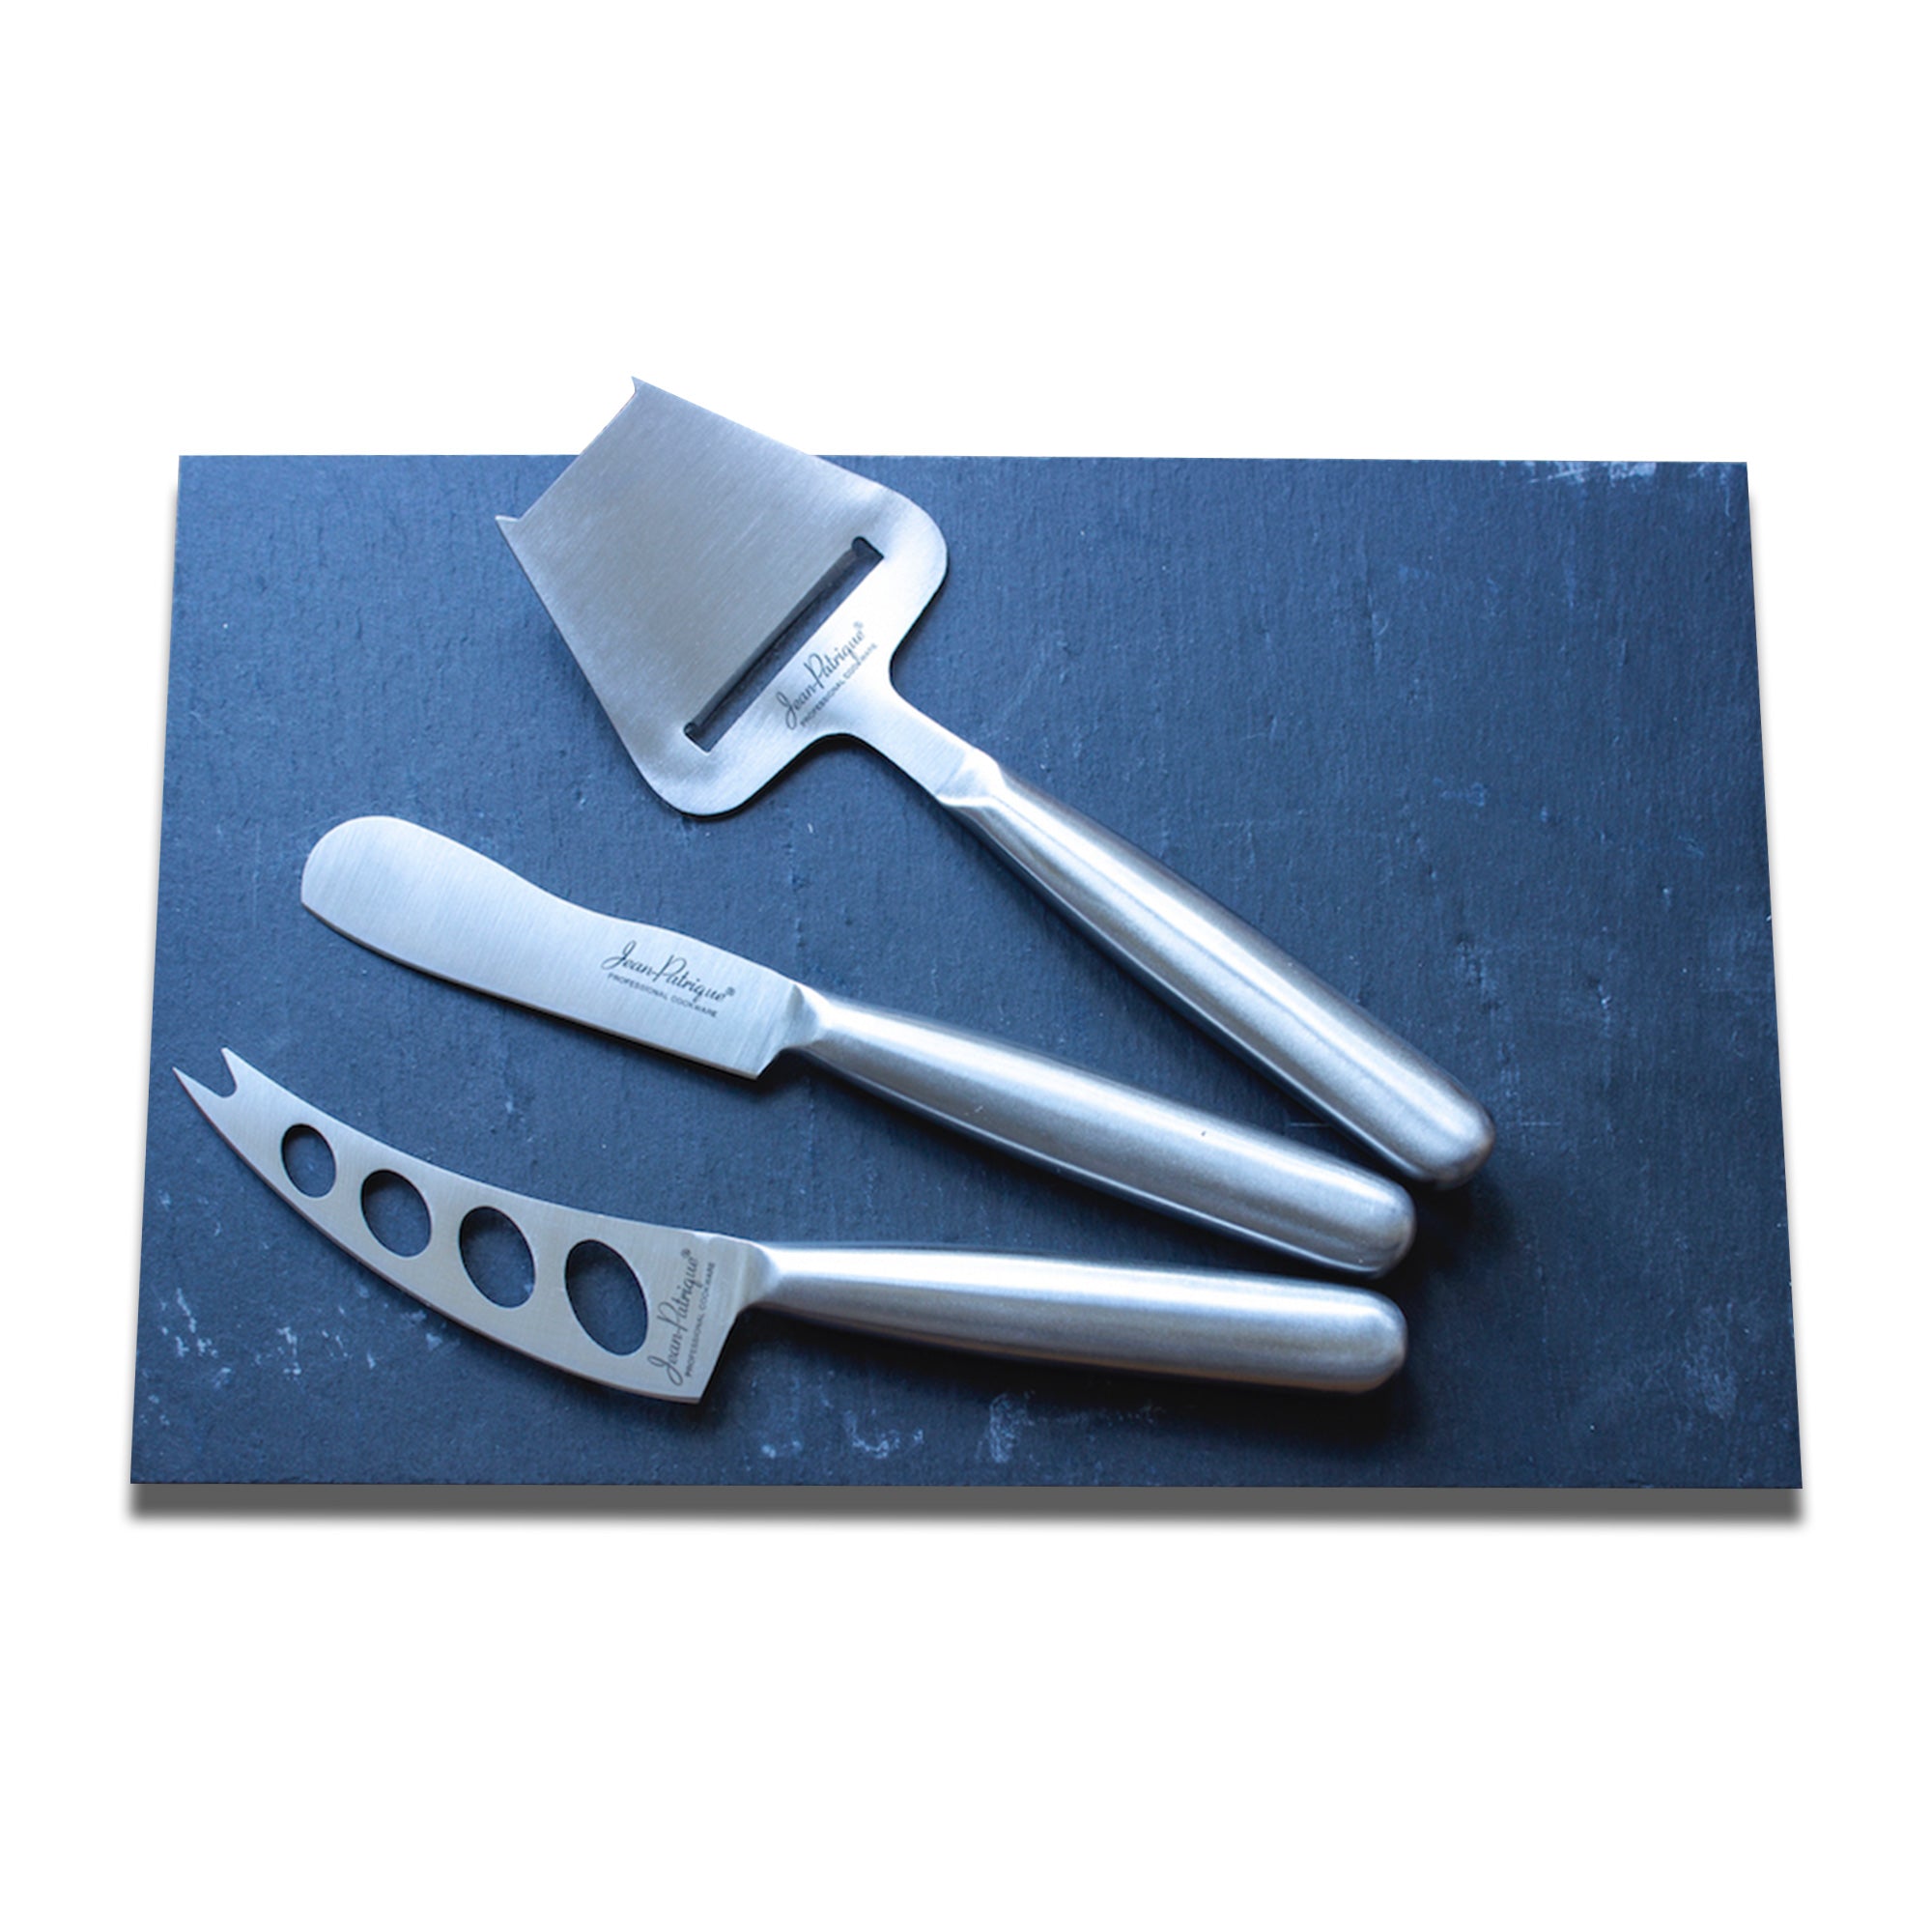 Tuscany Slate Serving Board & 3 Piece Cheese Knife Set